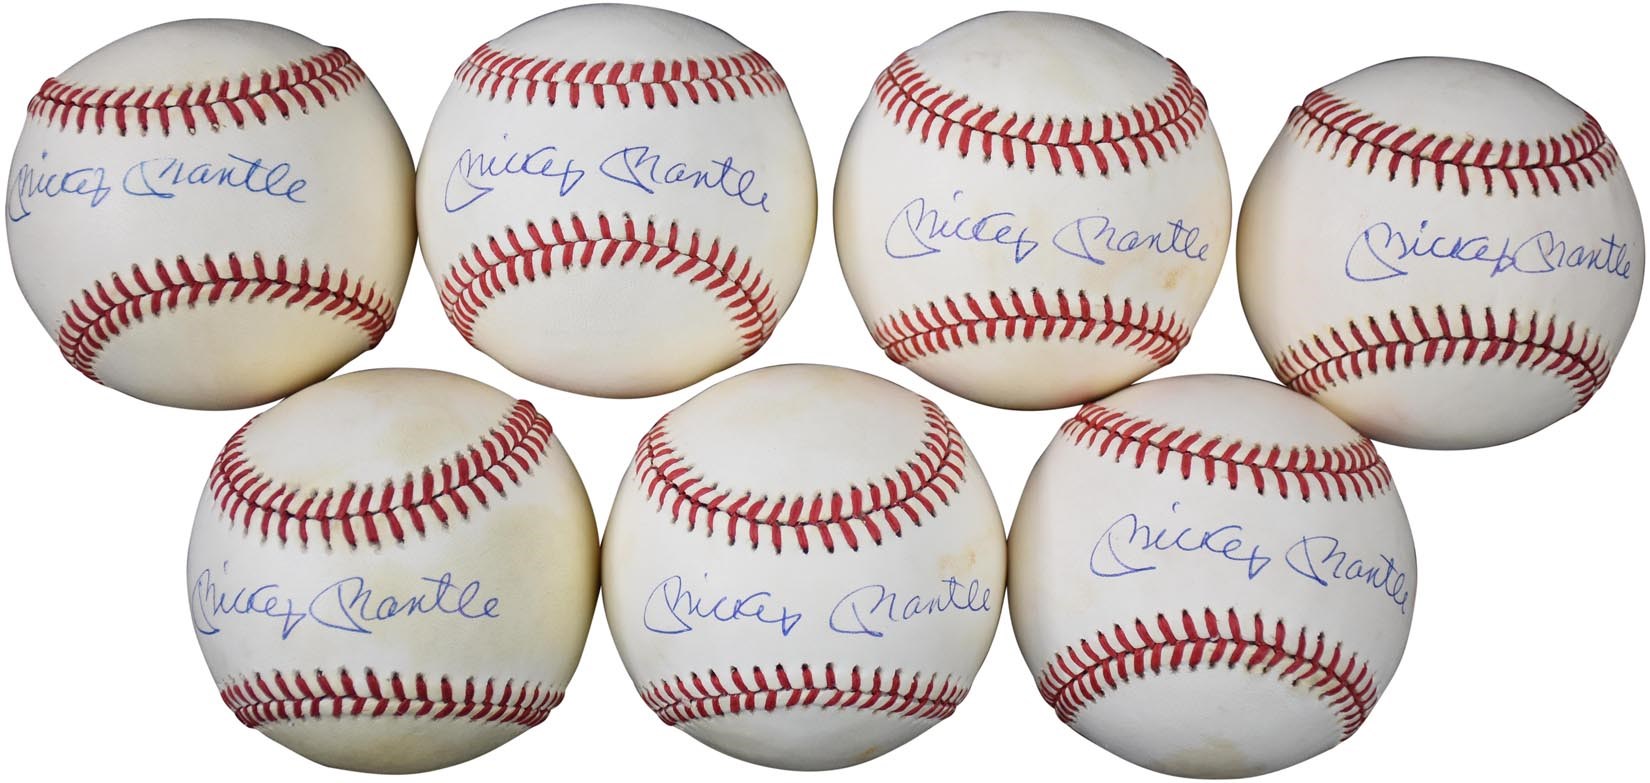 - "7" Mickey Mantle Single Signed Baseballs (All PSA)